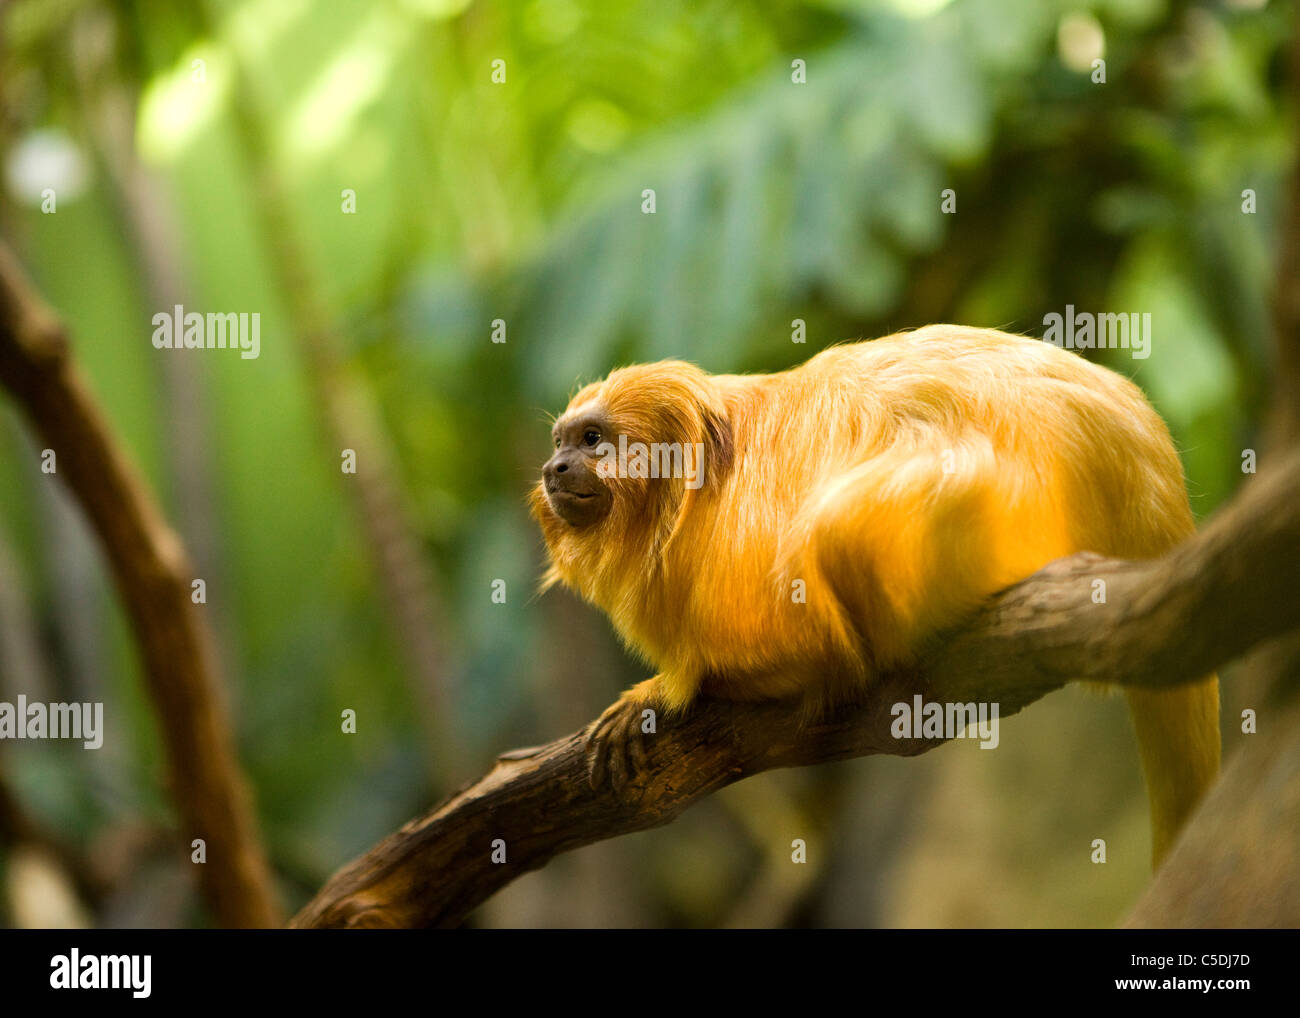 The endangered Golden Lion Tamarin (Leontopithecus rosalia) sitting on a tree limb Stock Photo